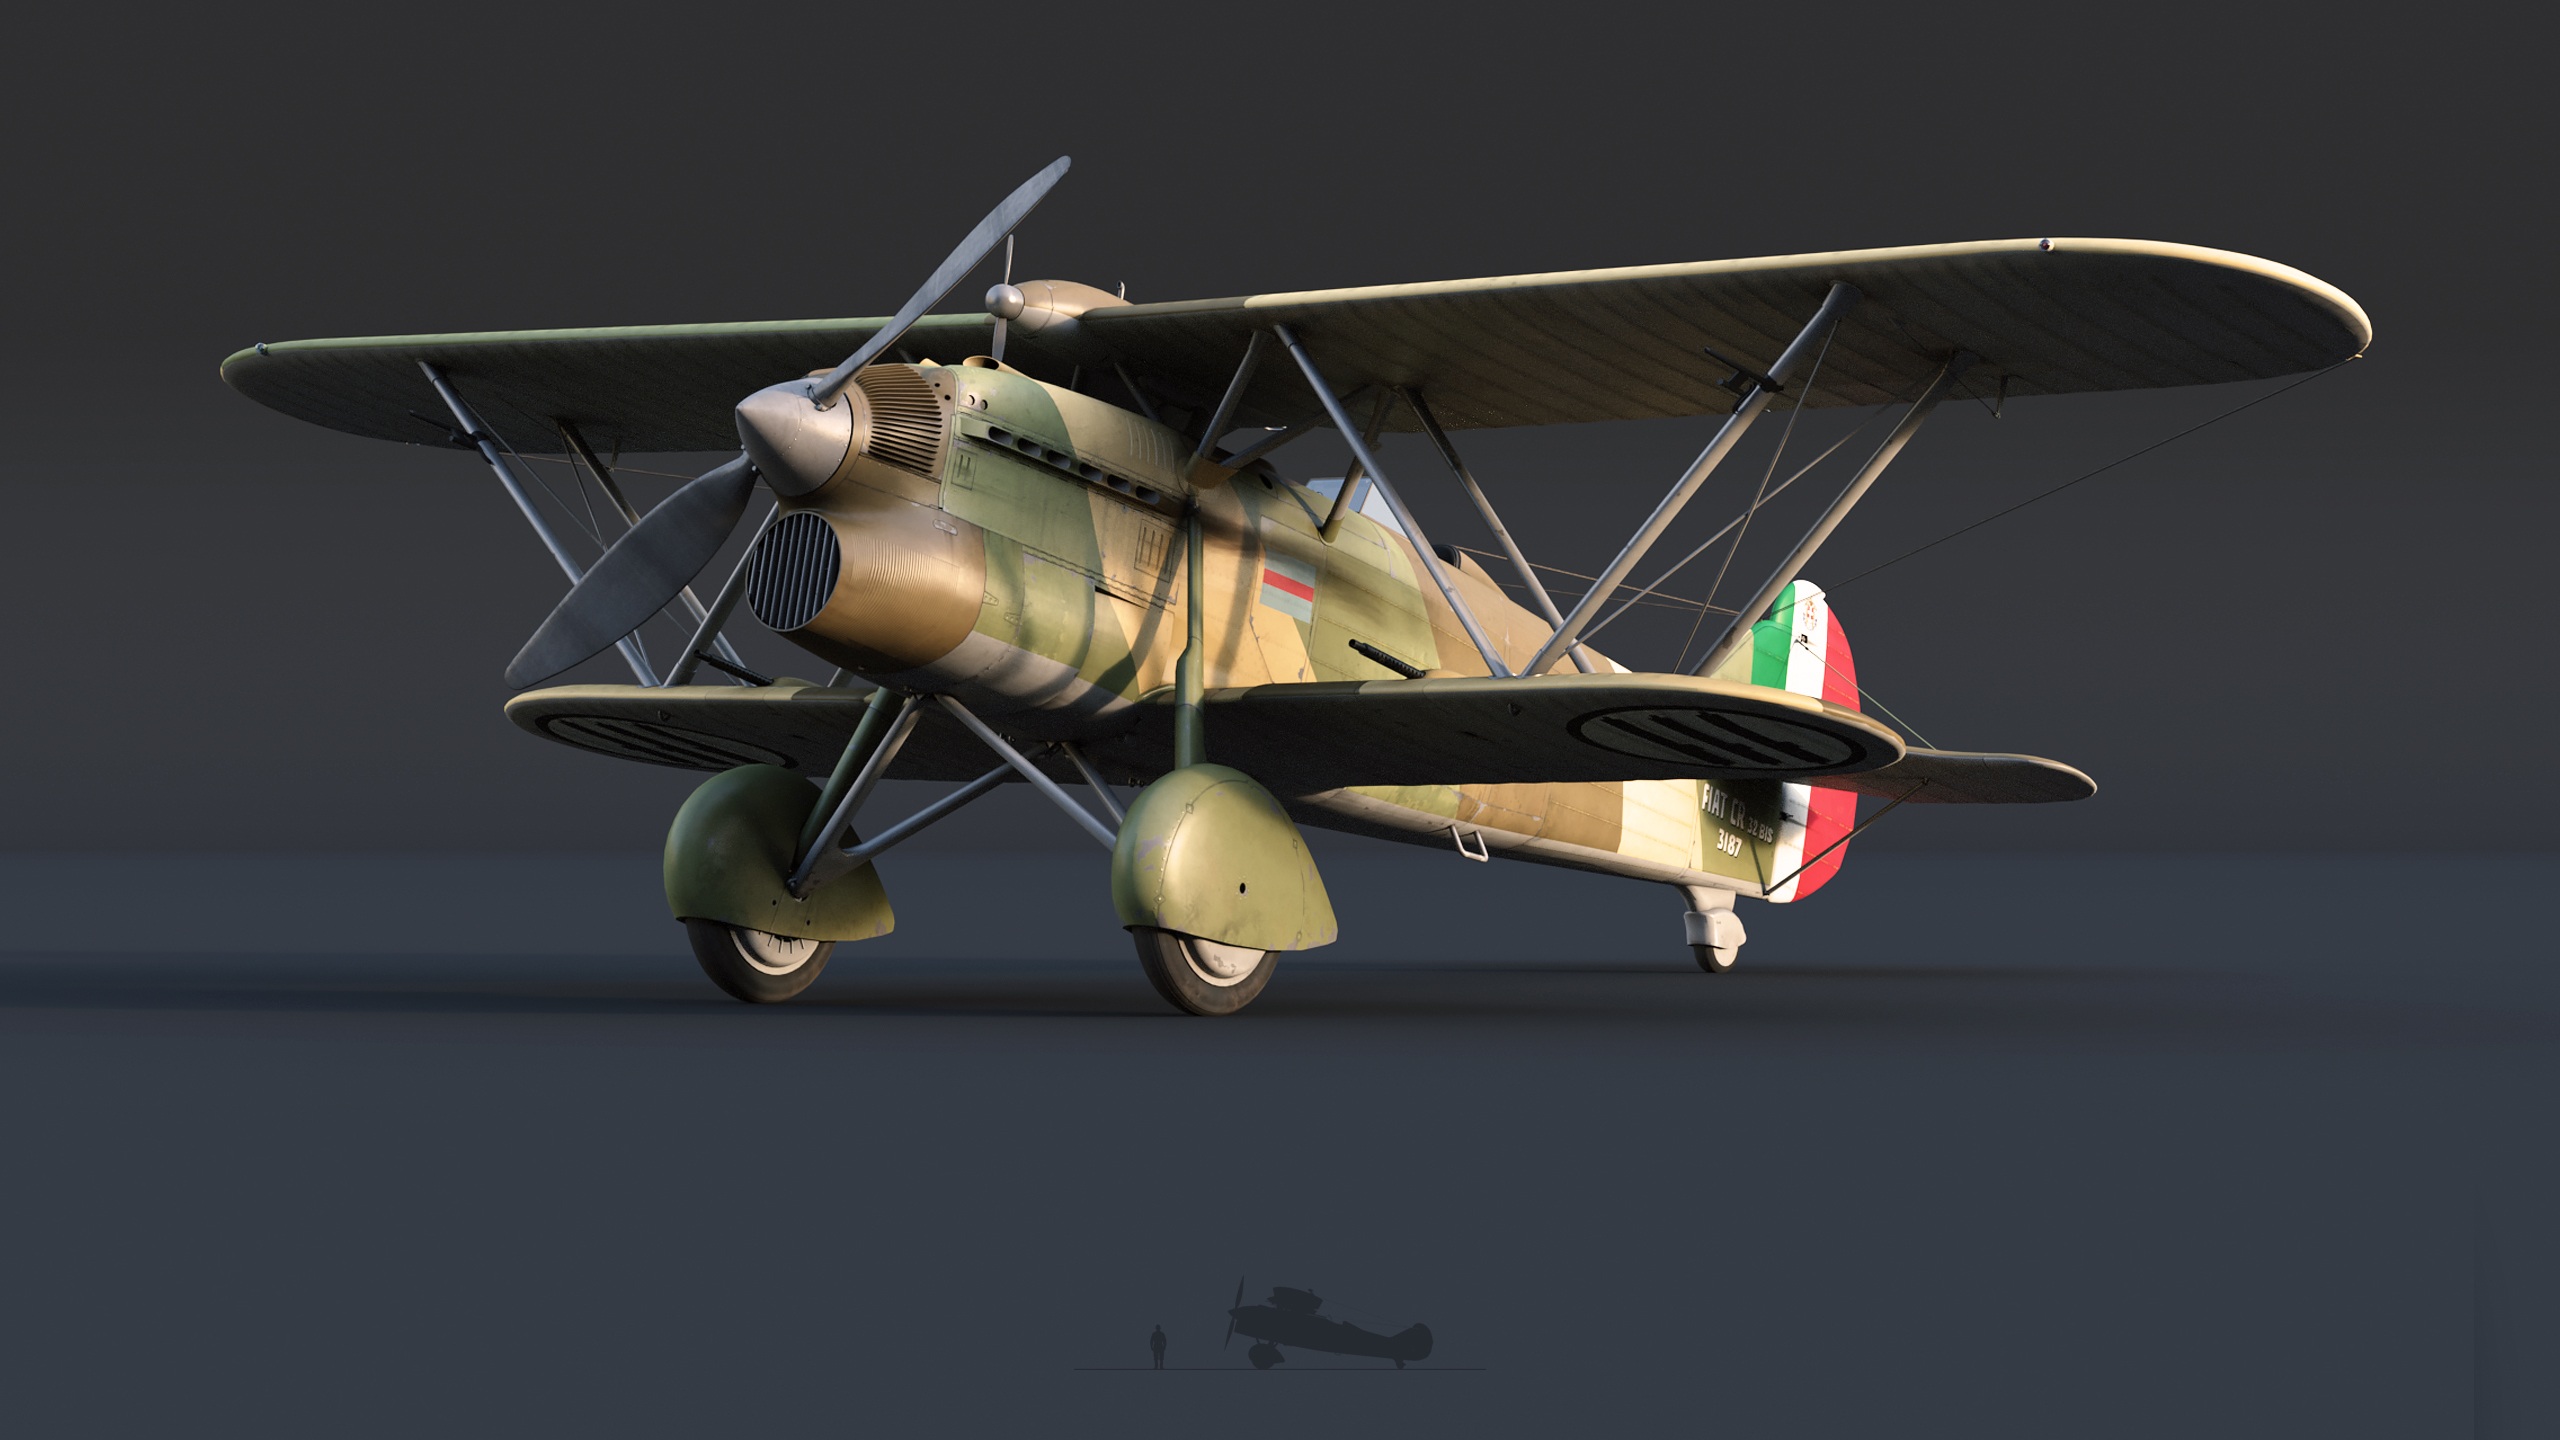 General 2560x1440 World War II war aircraft airplane military military aircraft biplane Italy Italian Air Force Italian Italian aircraft